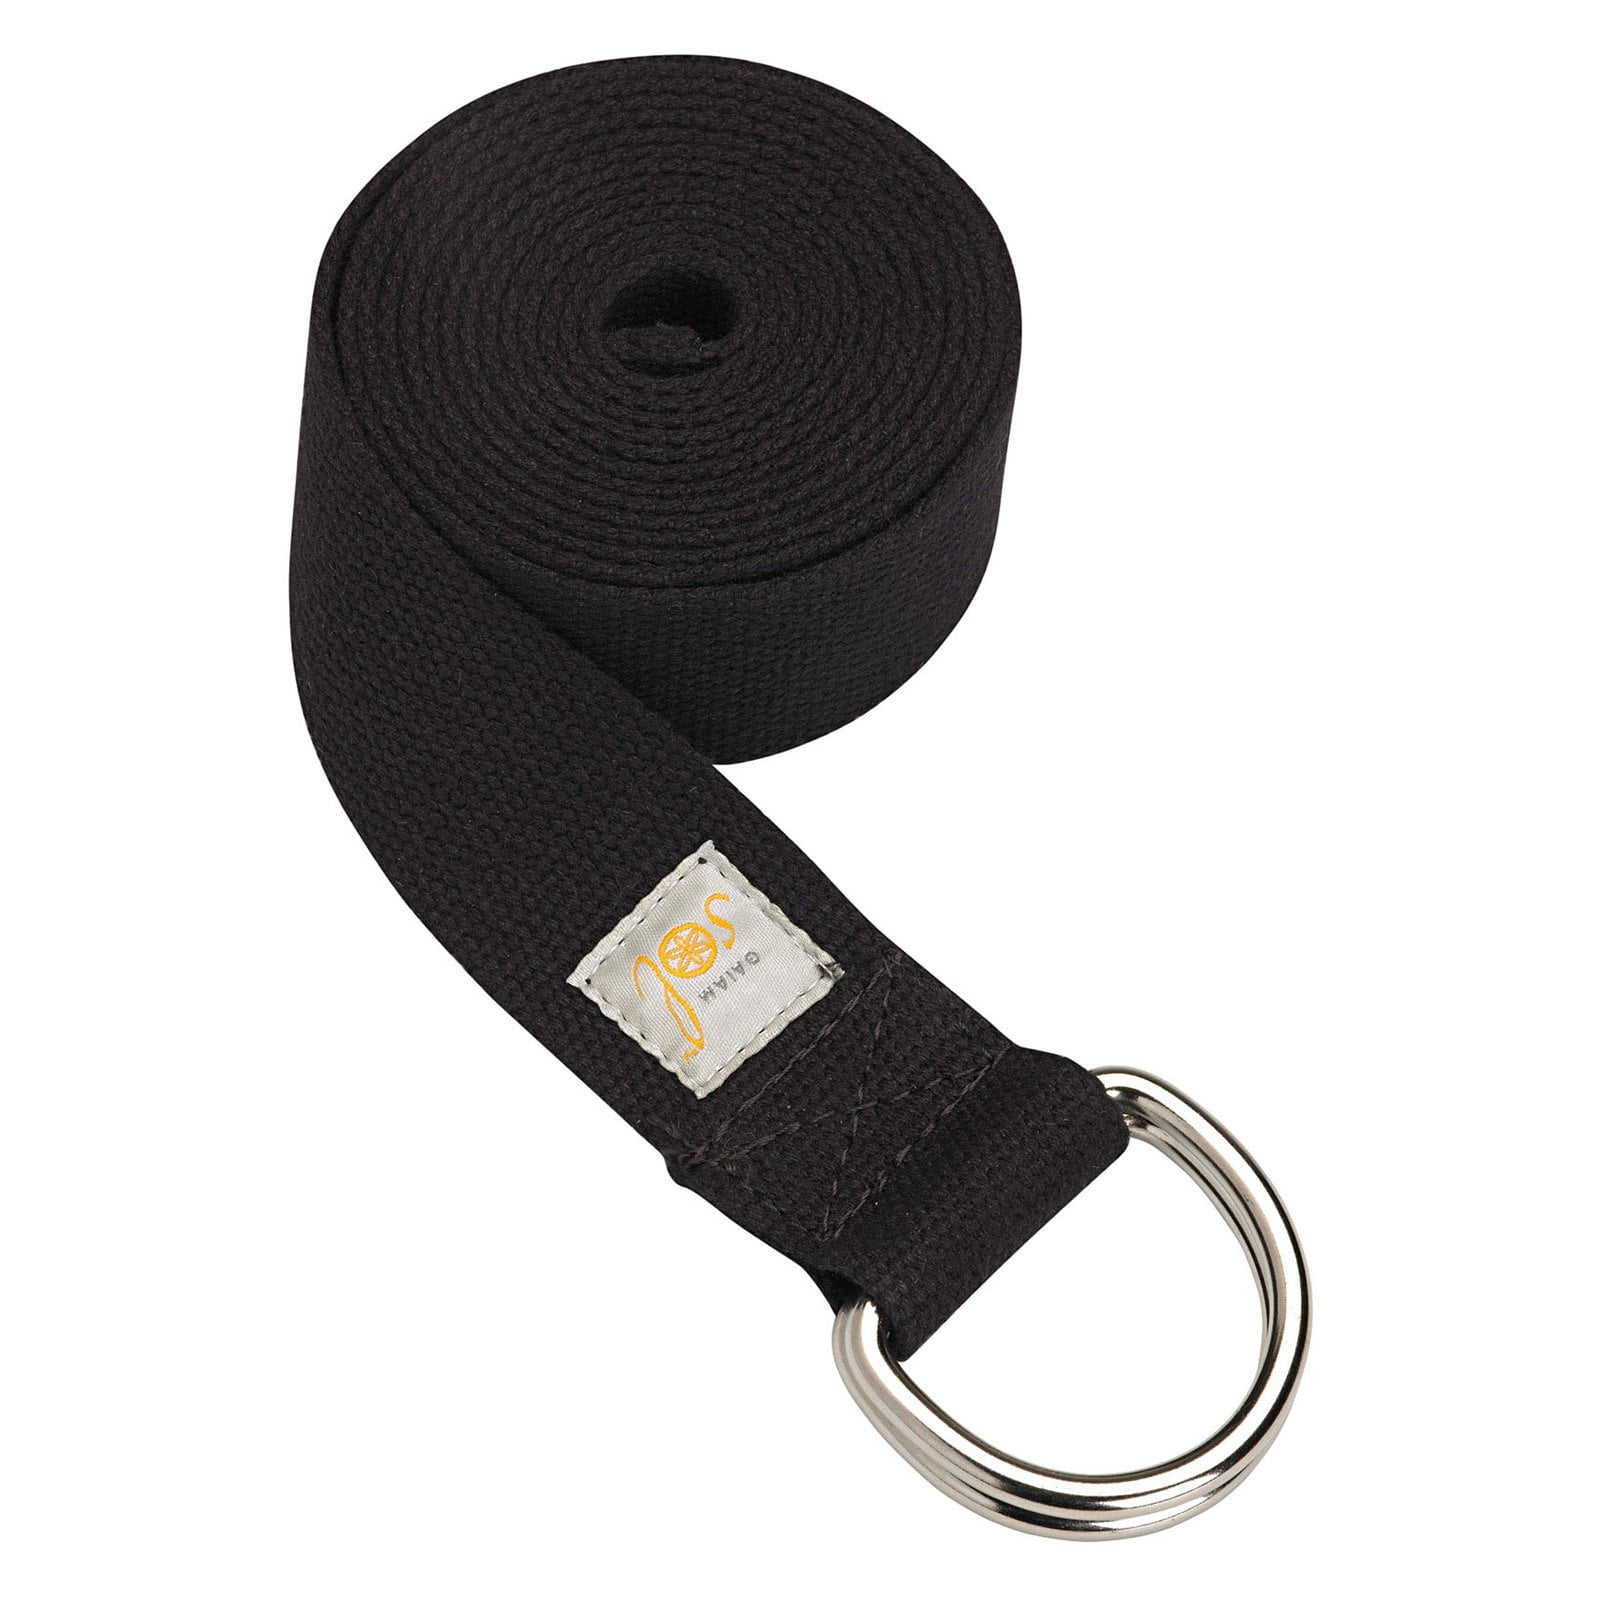 Reebok Premium Yoga Strap Durable Woven Stretch Belt Pilates with Metal Buckle 